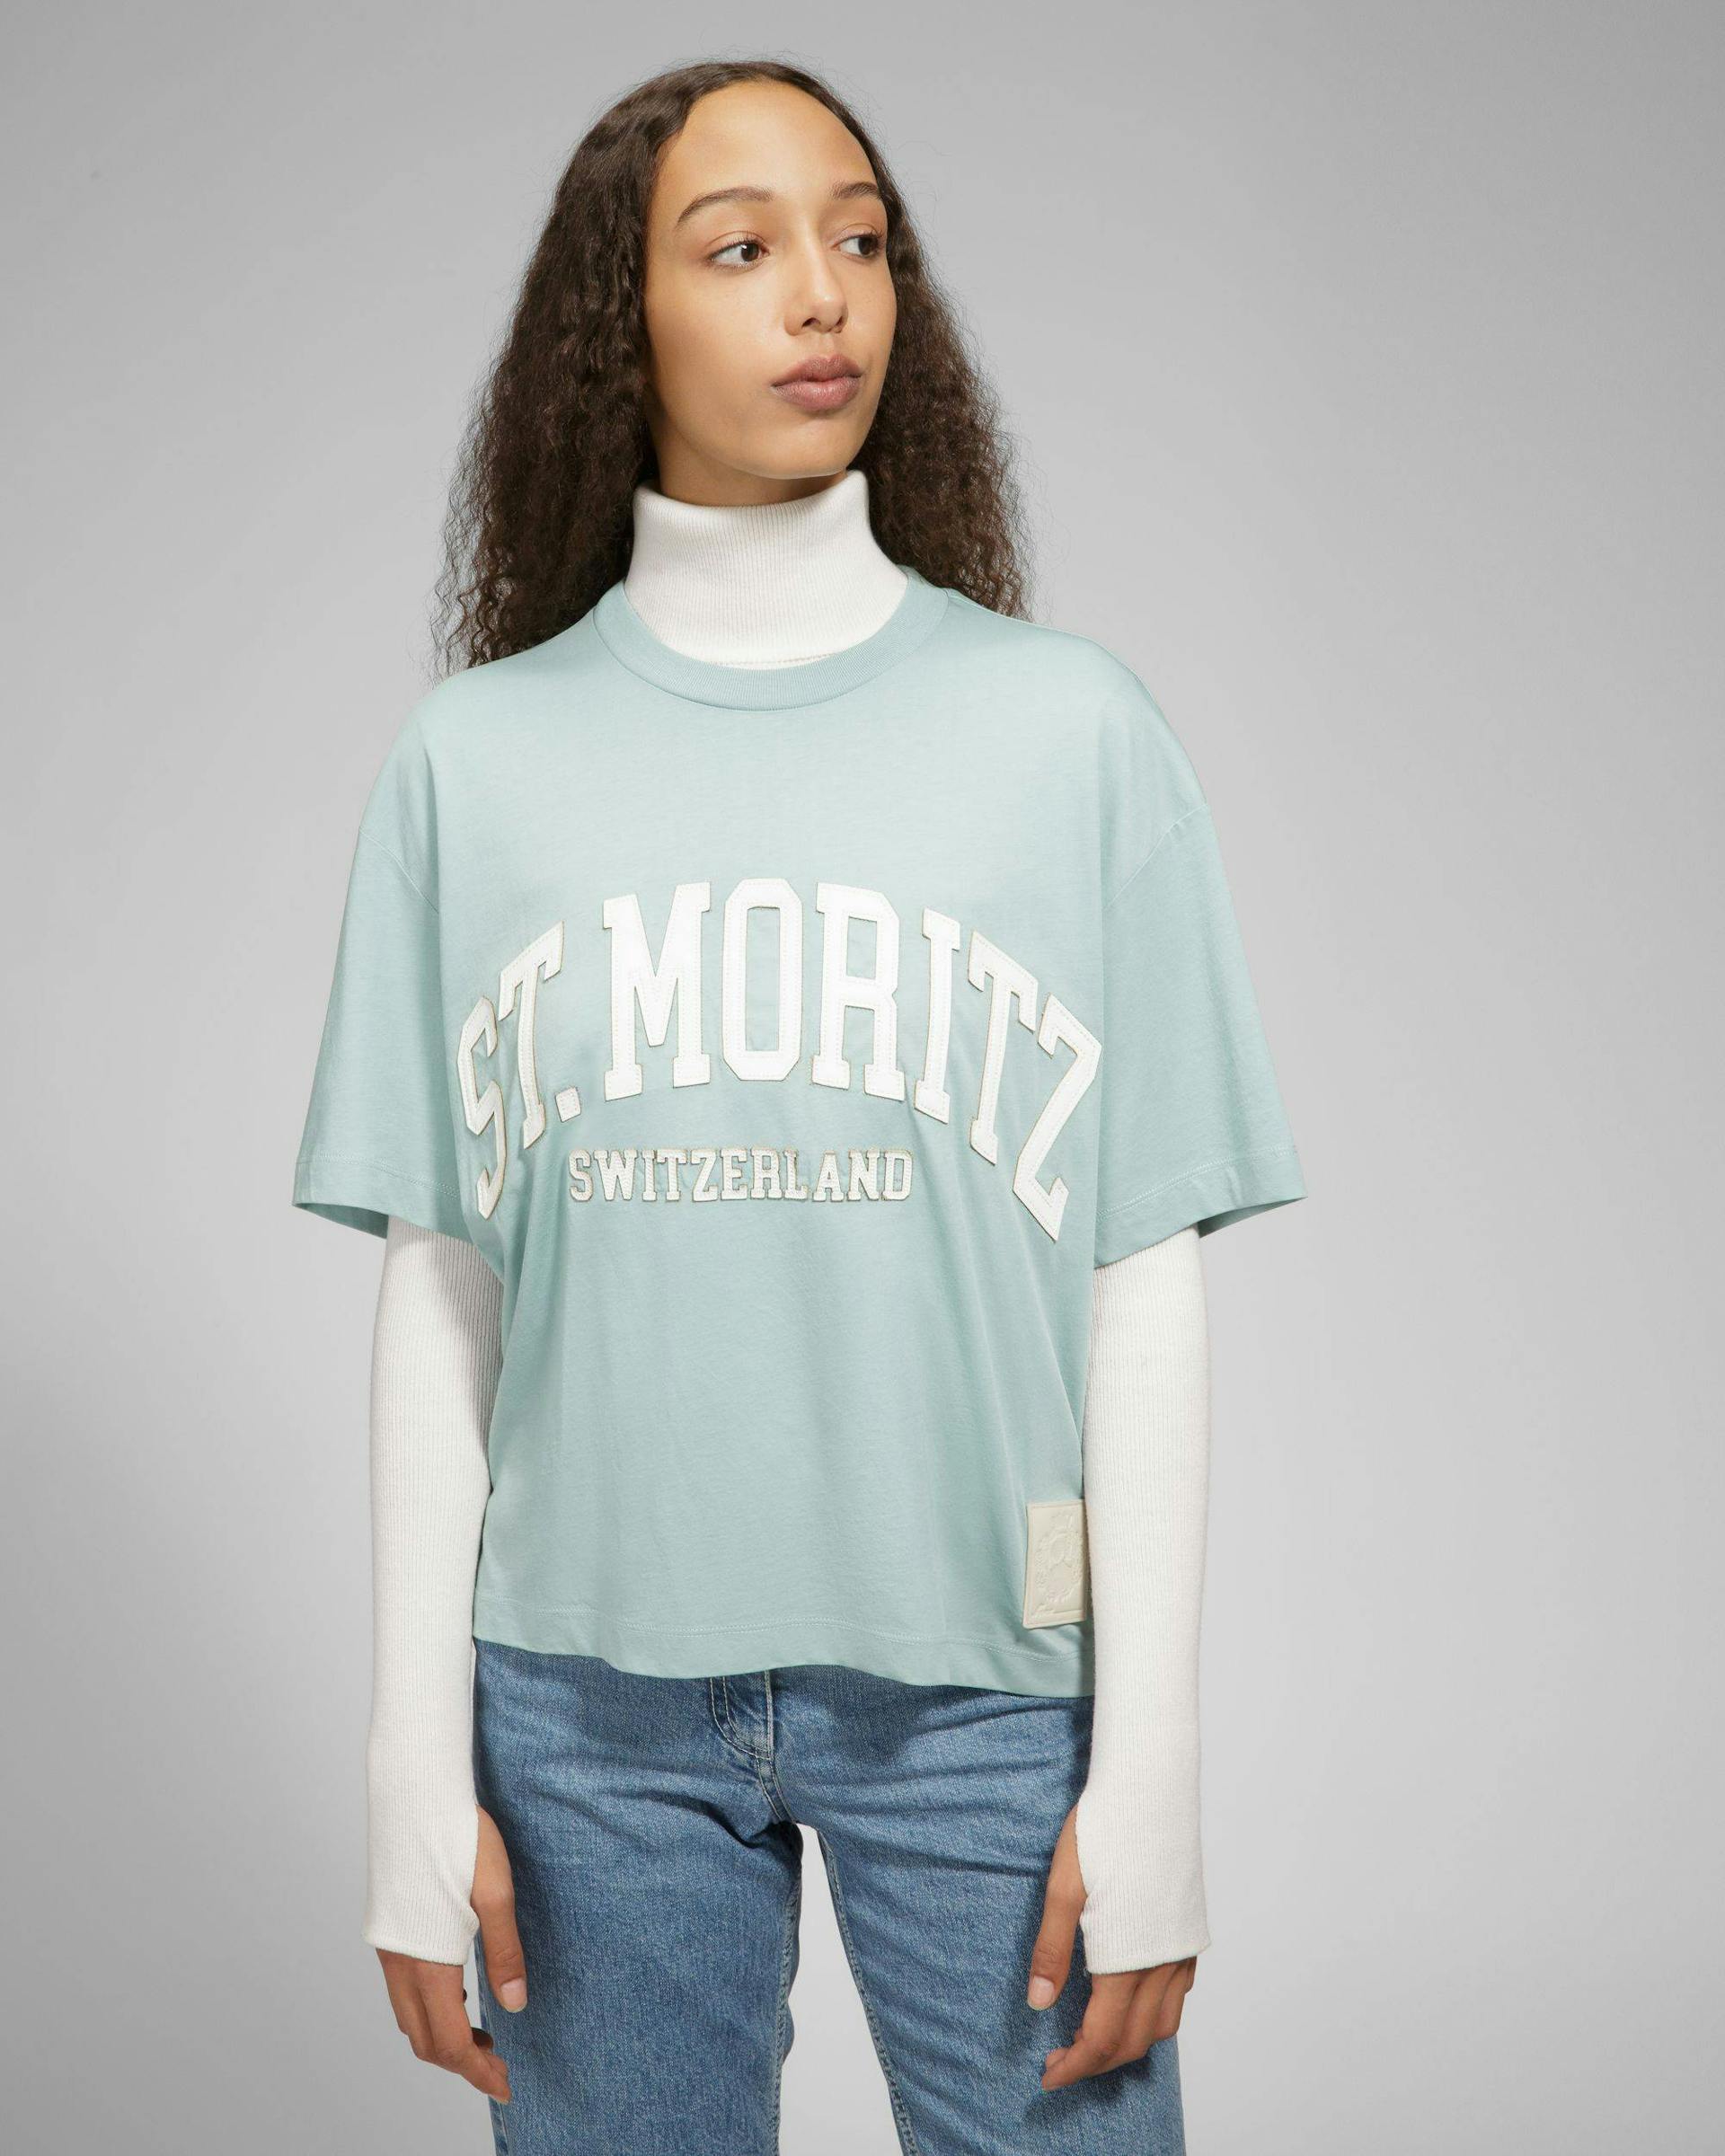 St Moritz Cotton T-Shirt In Blue - Men's - Bally - 01